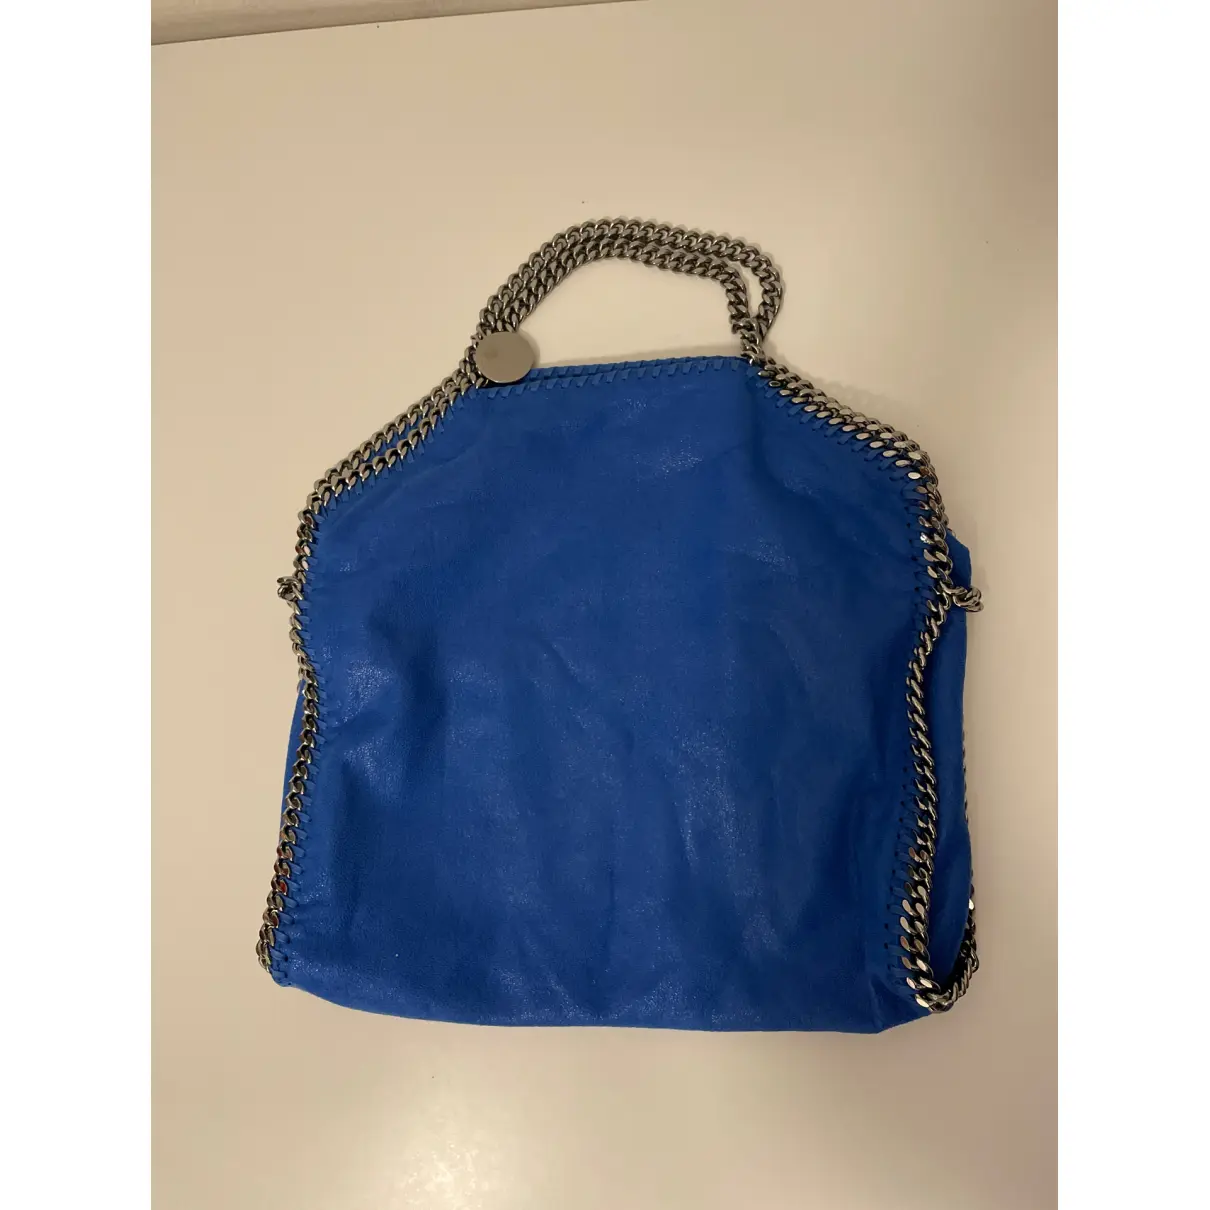 Buy Stella McCartney Falabella leather handbag online